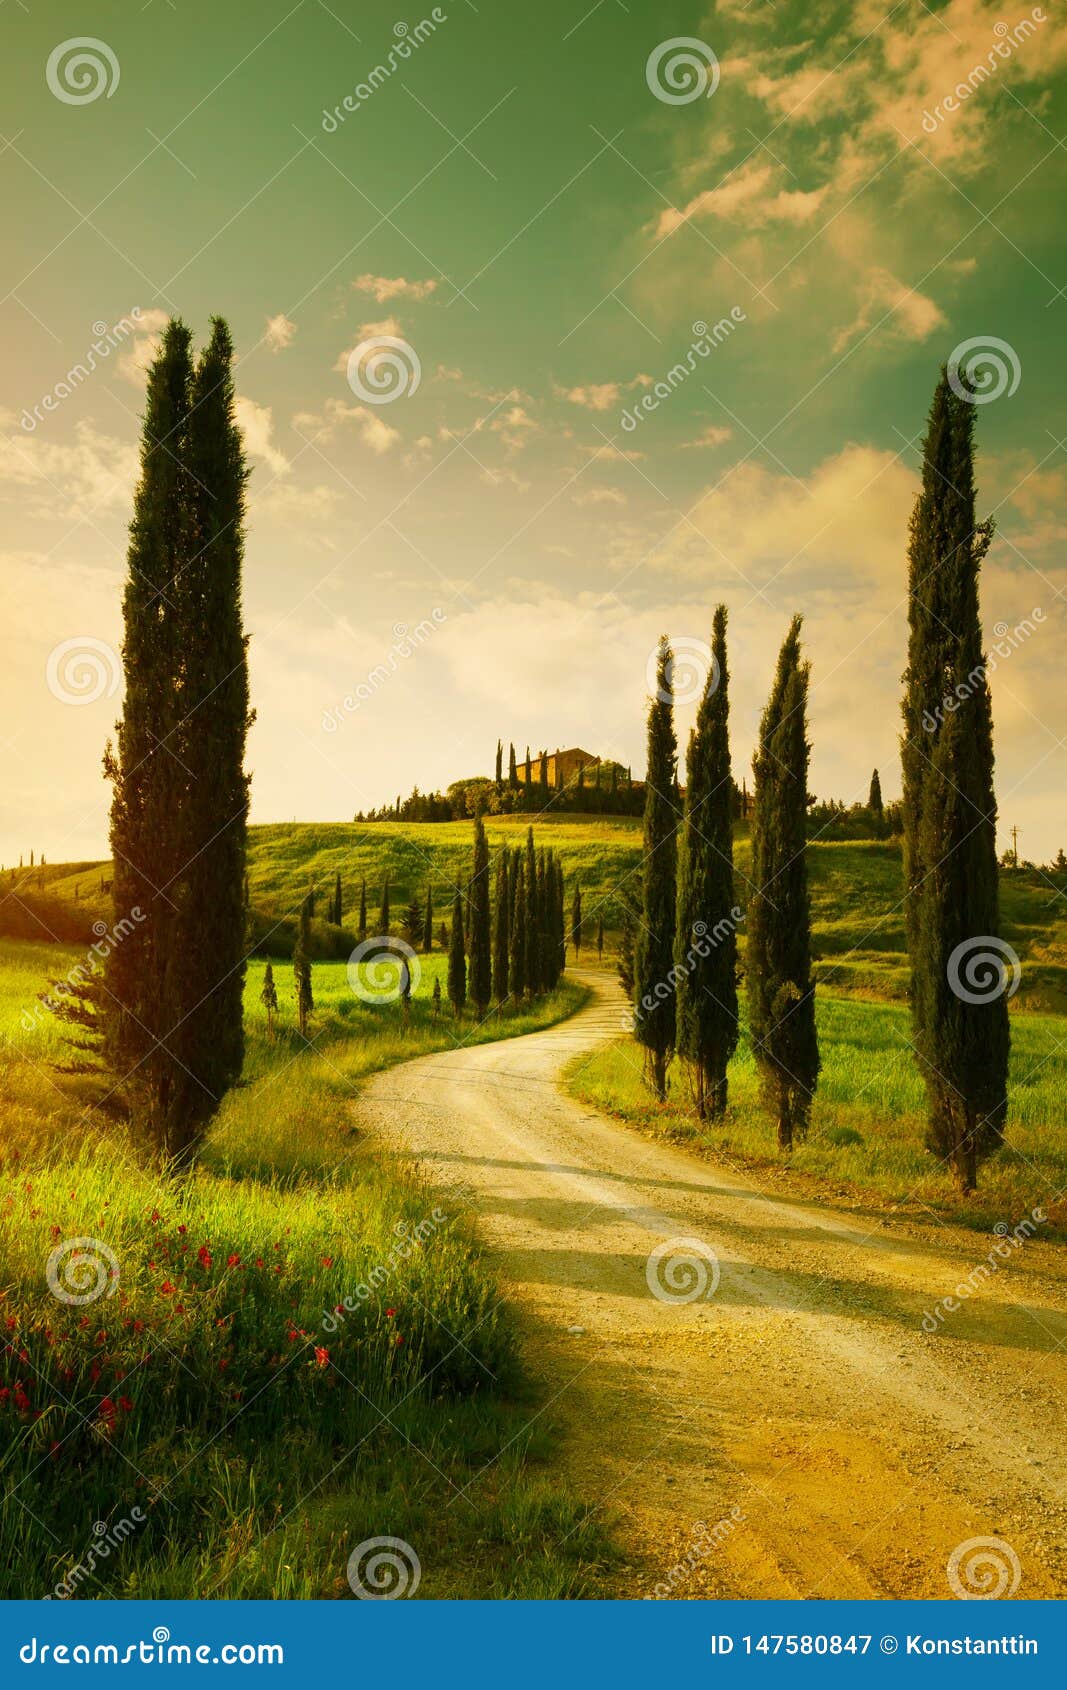 vintage tuscany countryside landscape